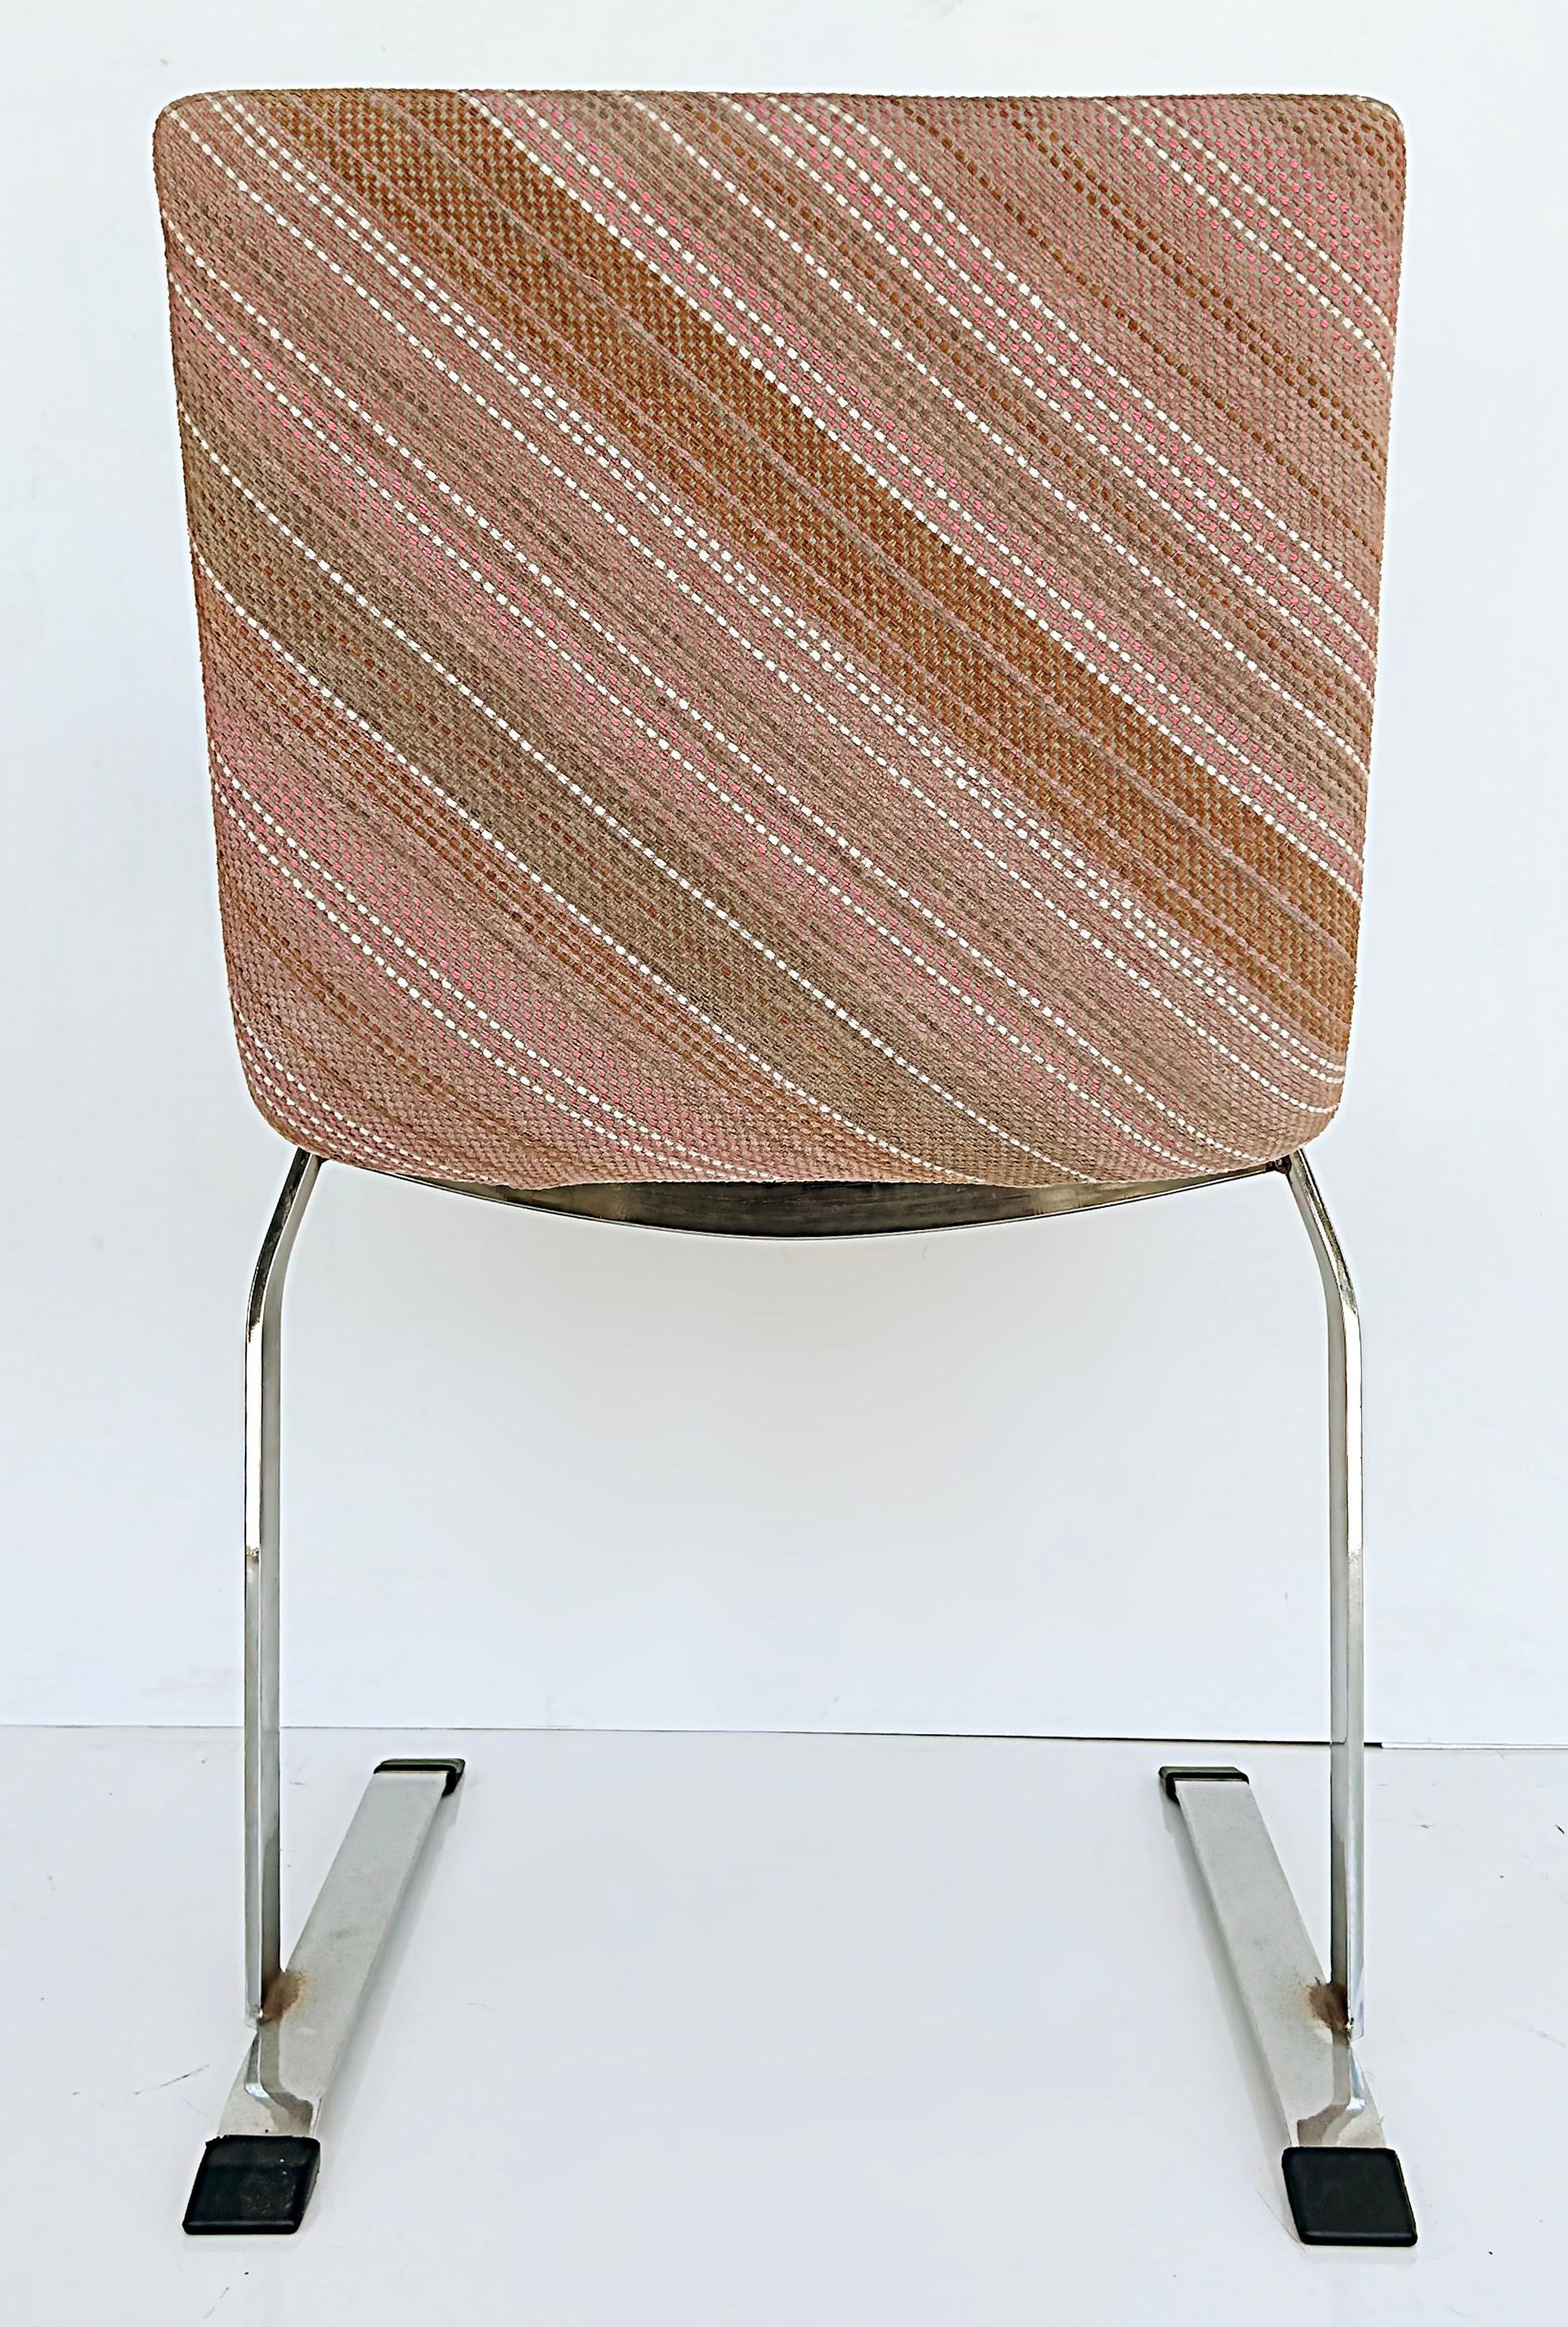 Vintage Saporiti Italia Stainless Steel Dining Chairs, Set of 4, Original Fabric 1